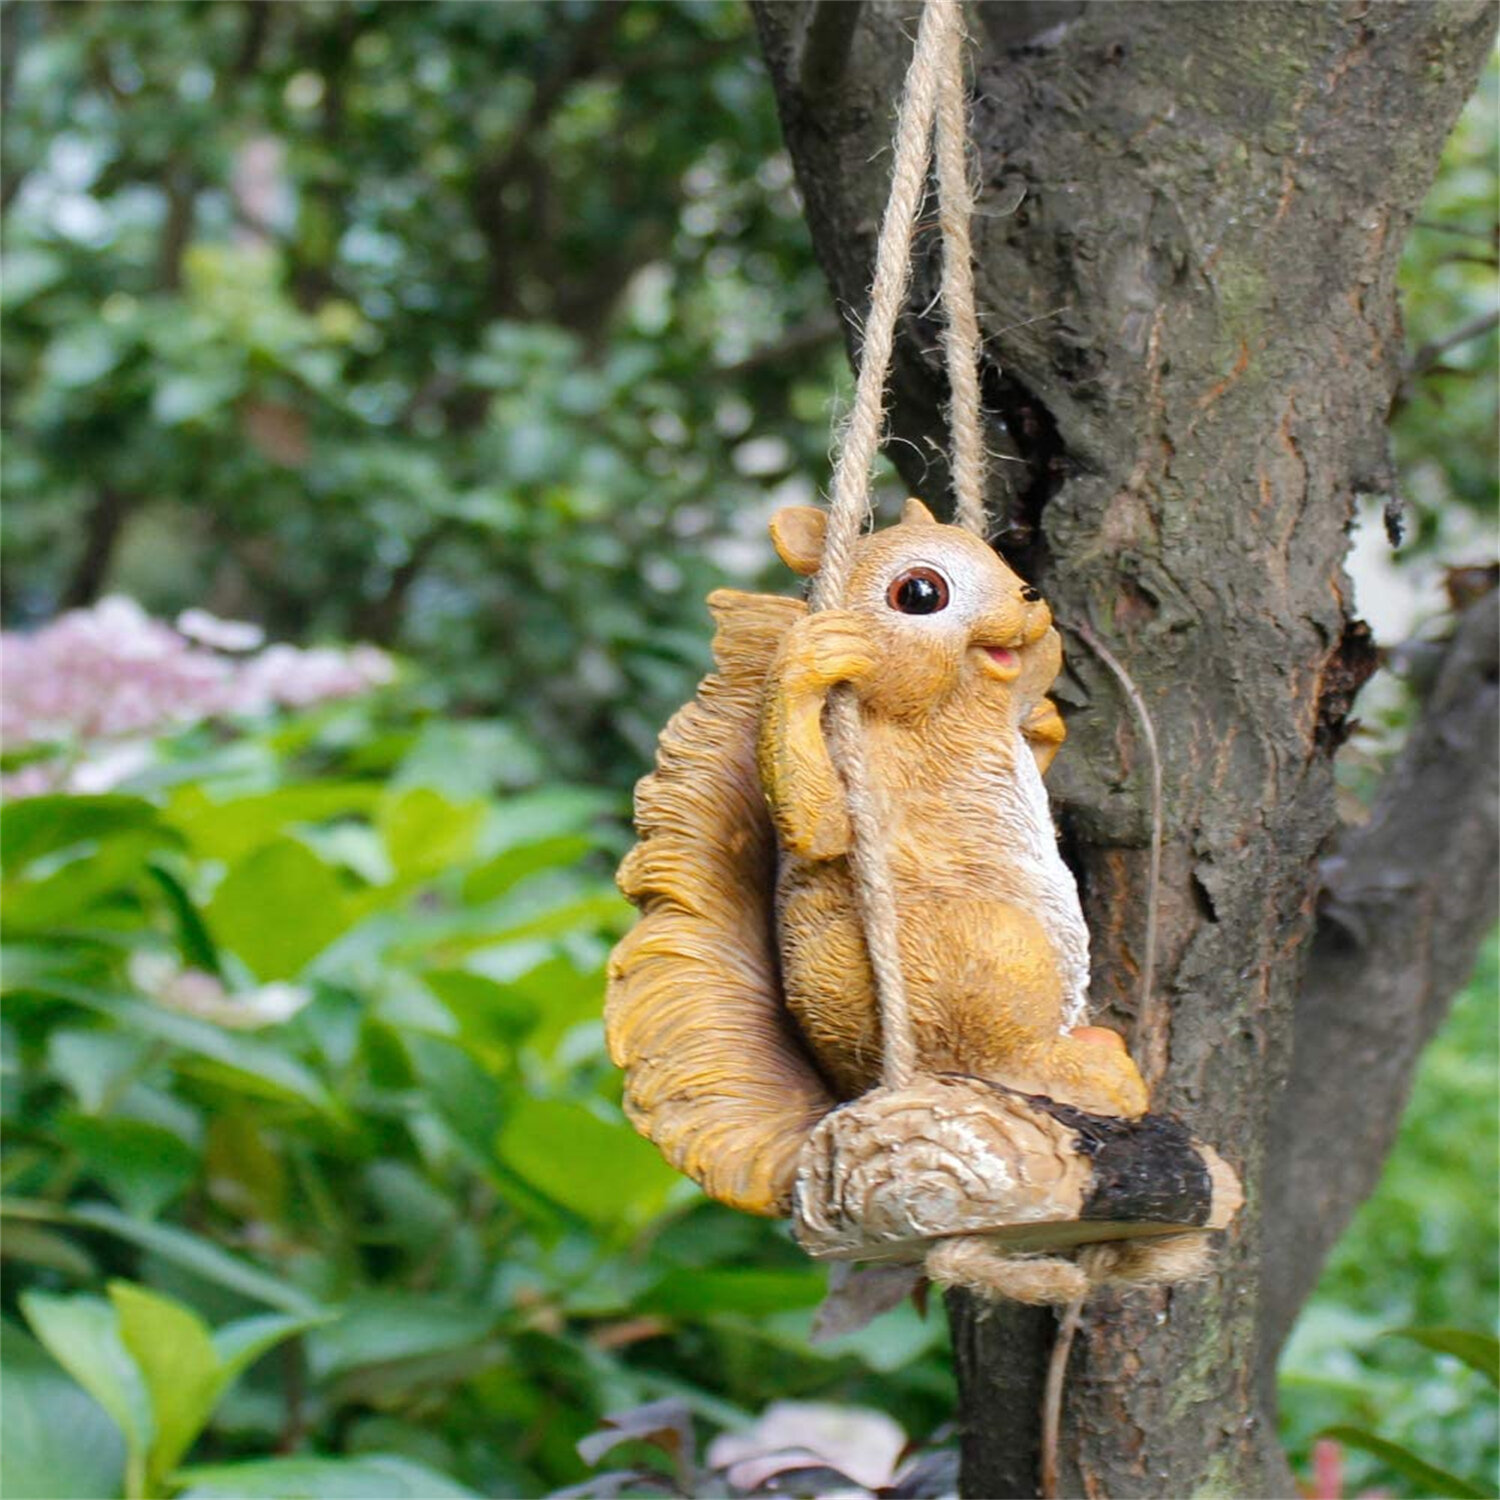 Simulation Squirrel Toy Model Handcraft Garden Home Lawn Decor Ornament Gift